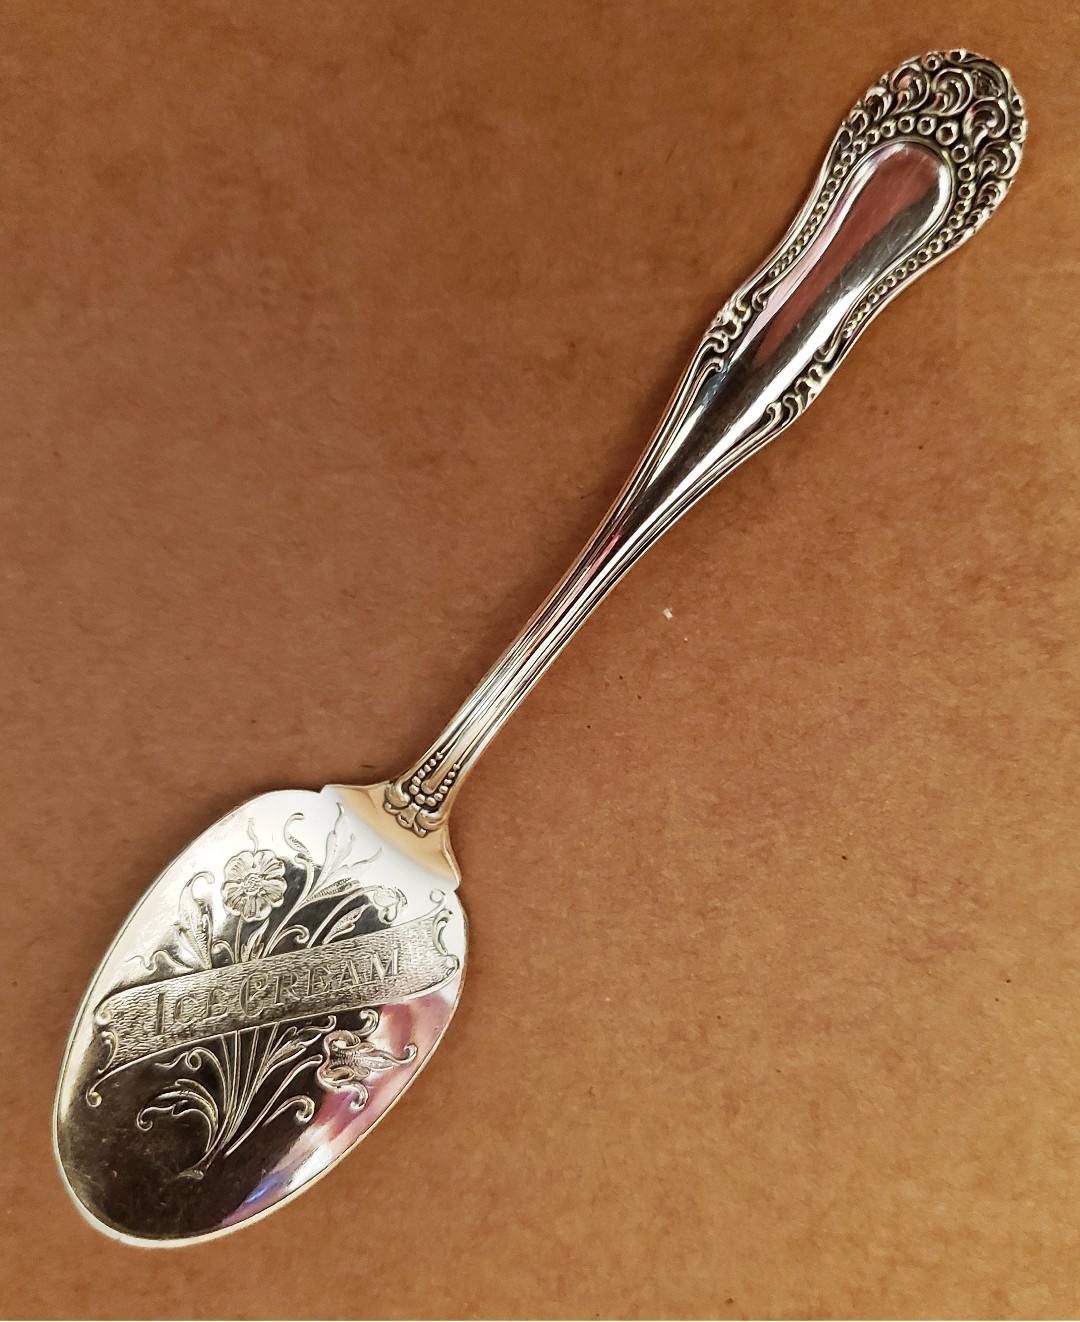 weinberg-ice-cream-spoon-1 (1).jpg